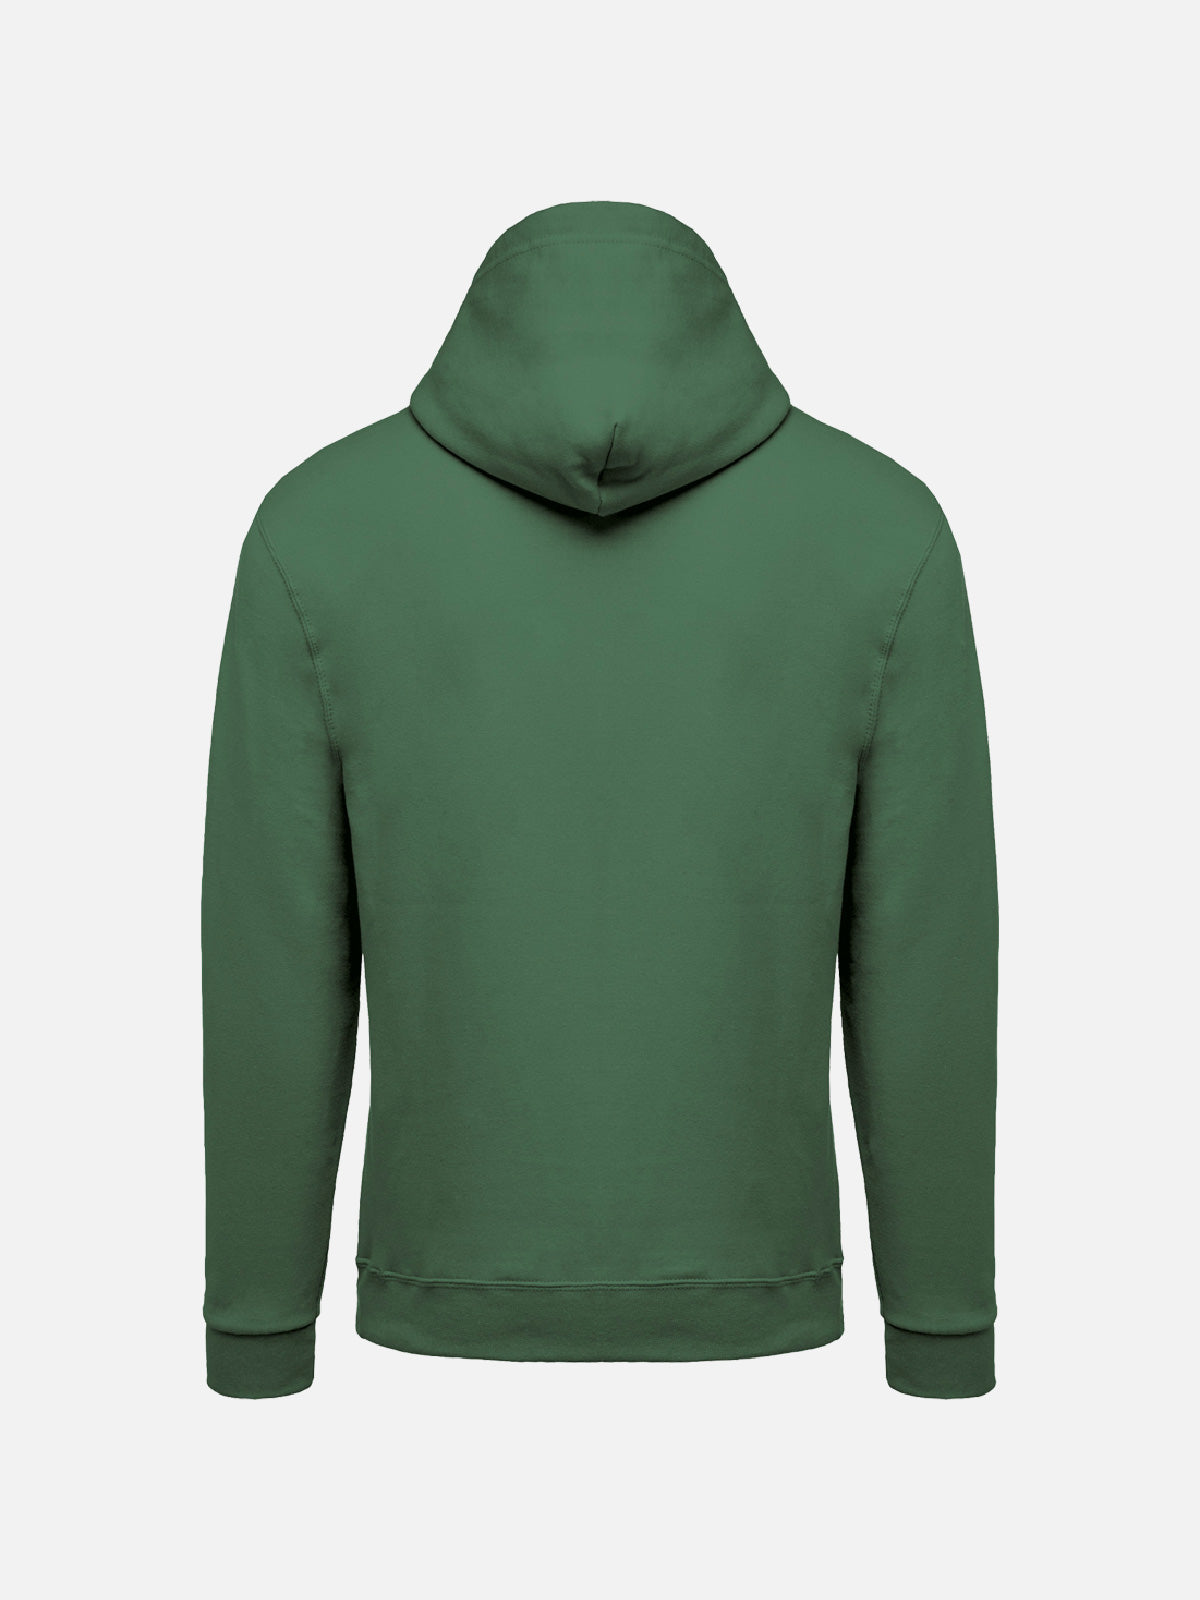 Unisex College Sweatshirt - Hearty Green